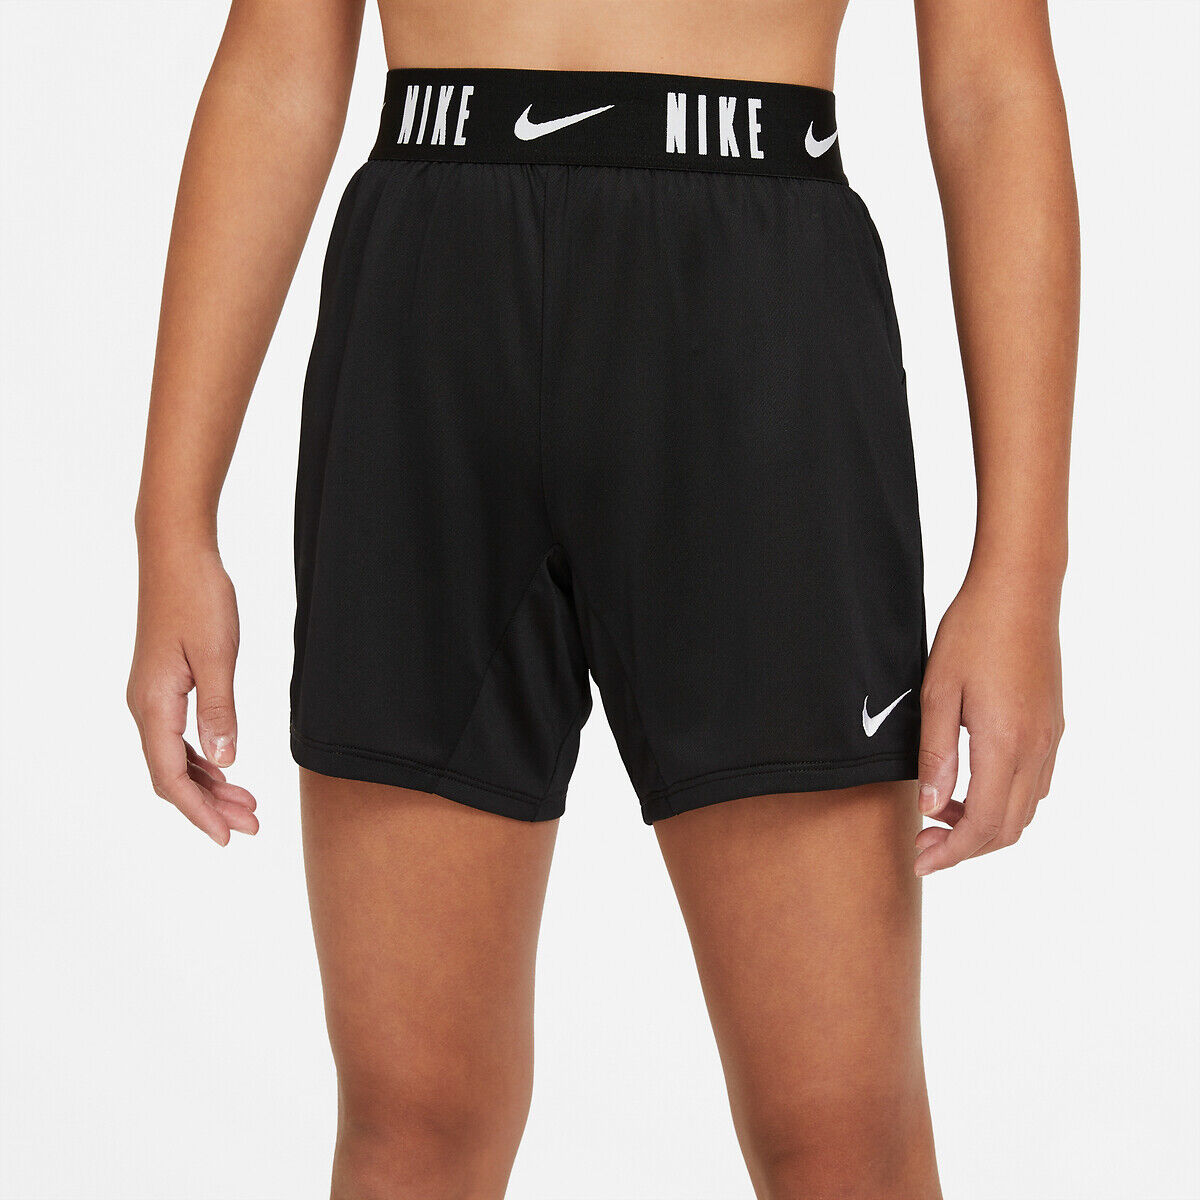 NIKE Short de sport Nike Dri Fit 6 - 16 ans